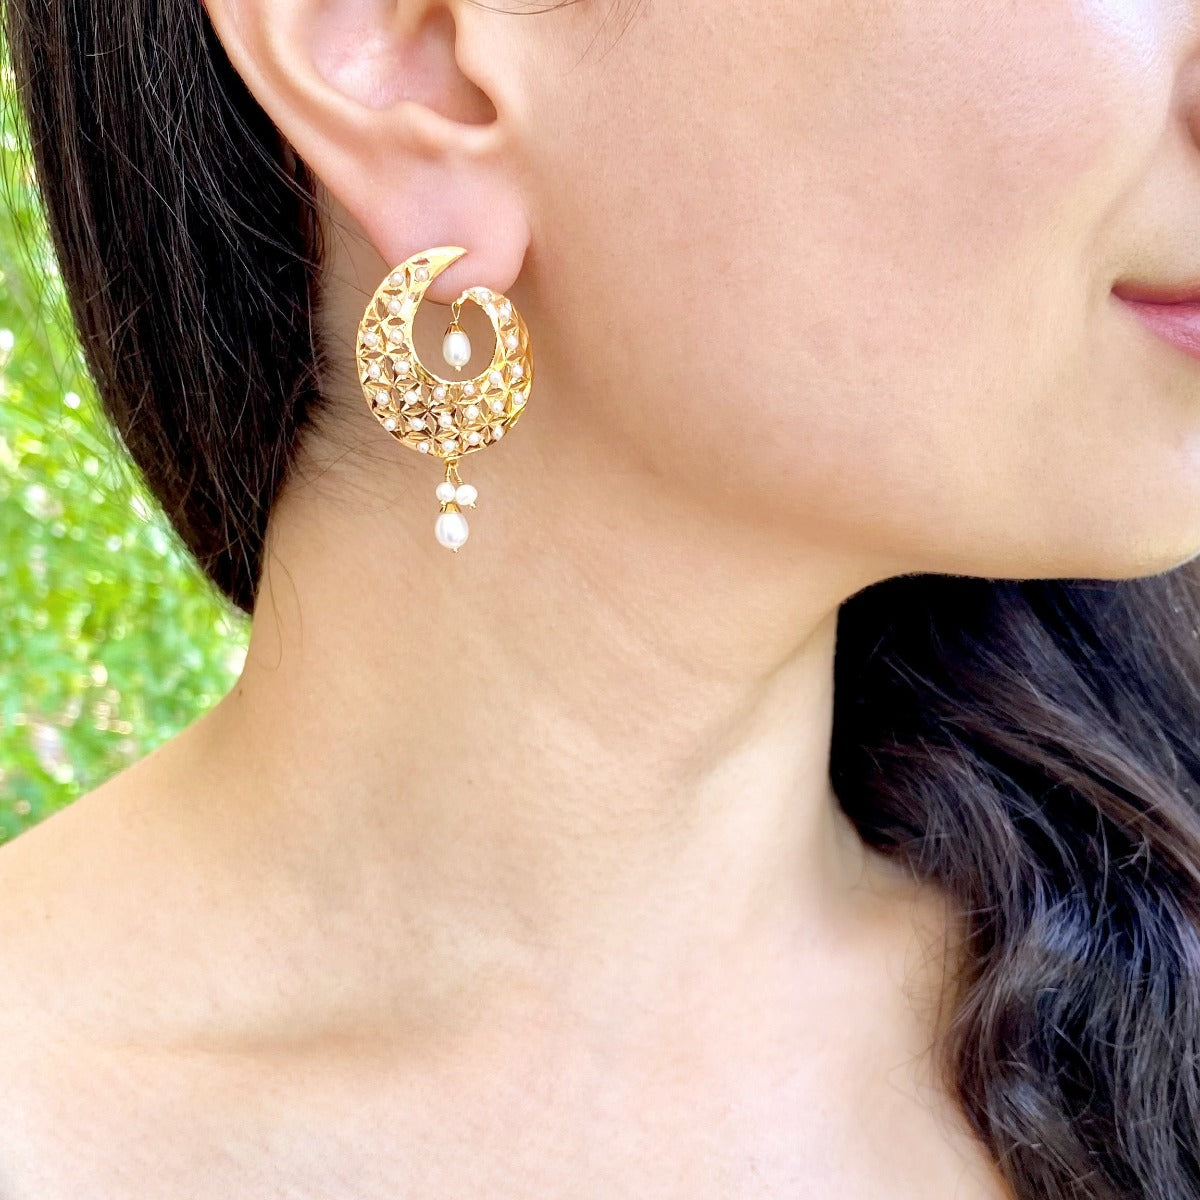 22k joroa earrings studded with pearls for women